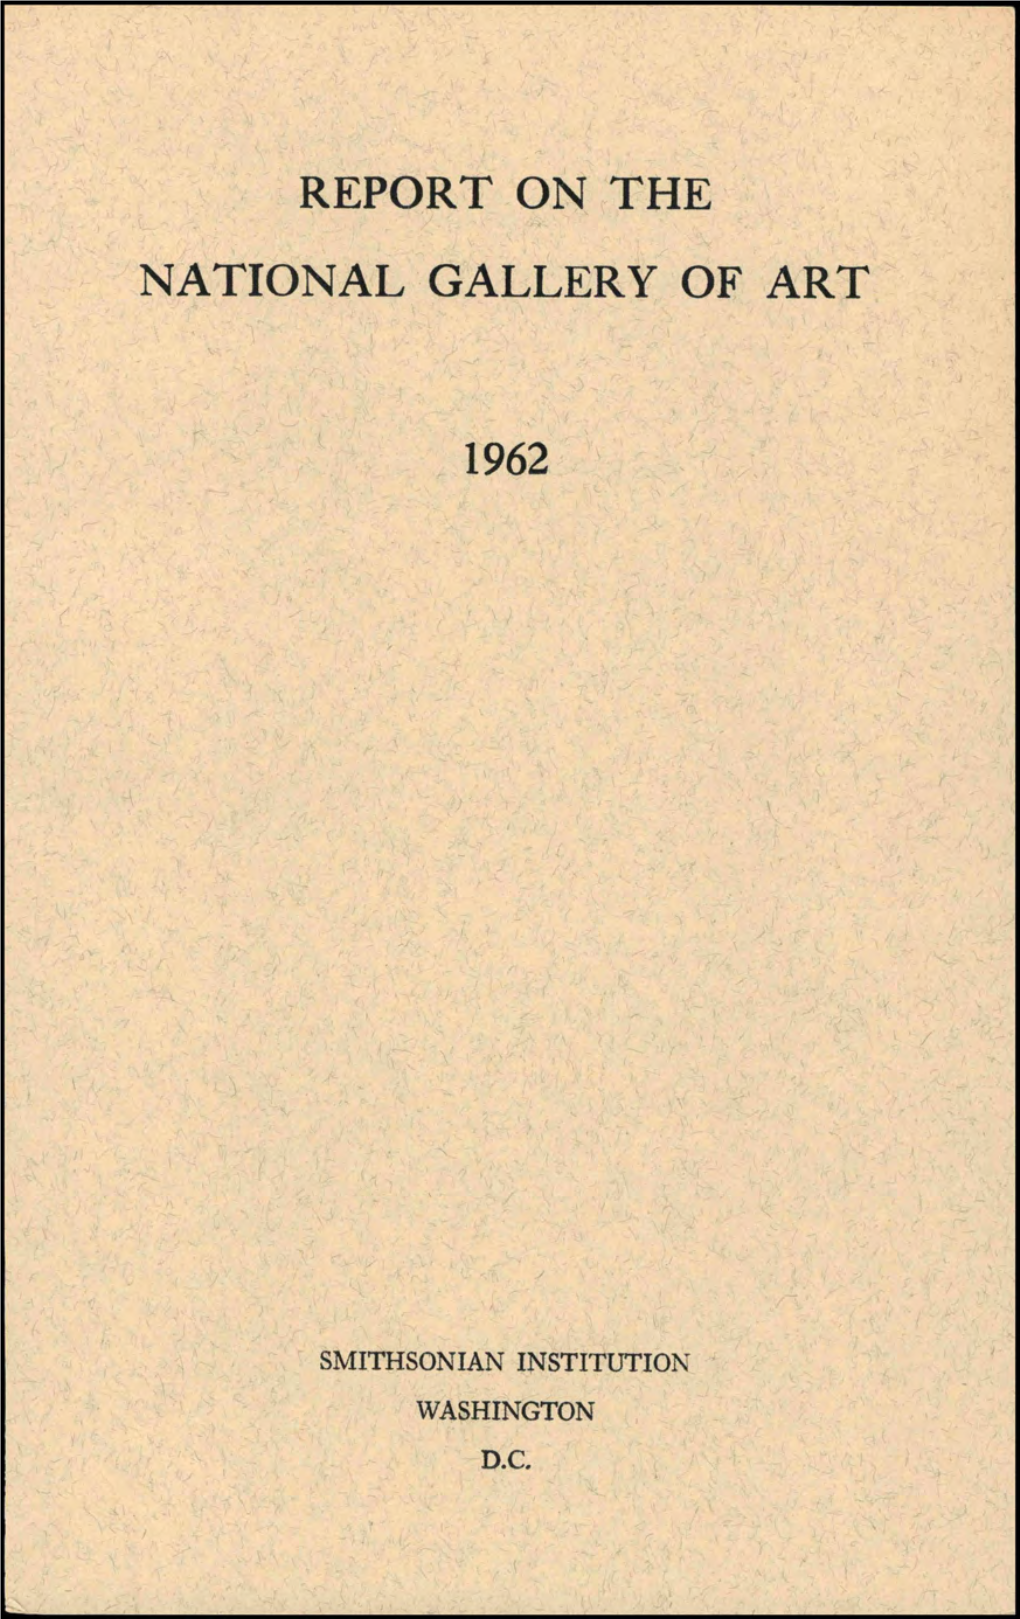 Annual Report 1962